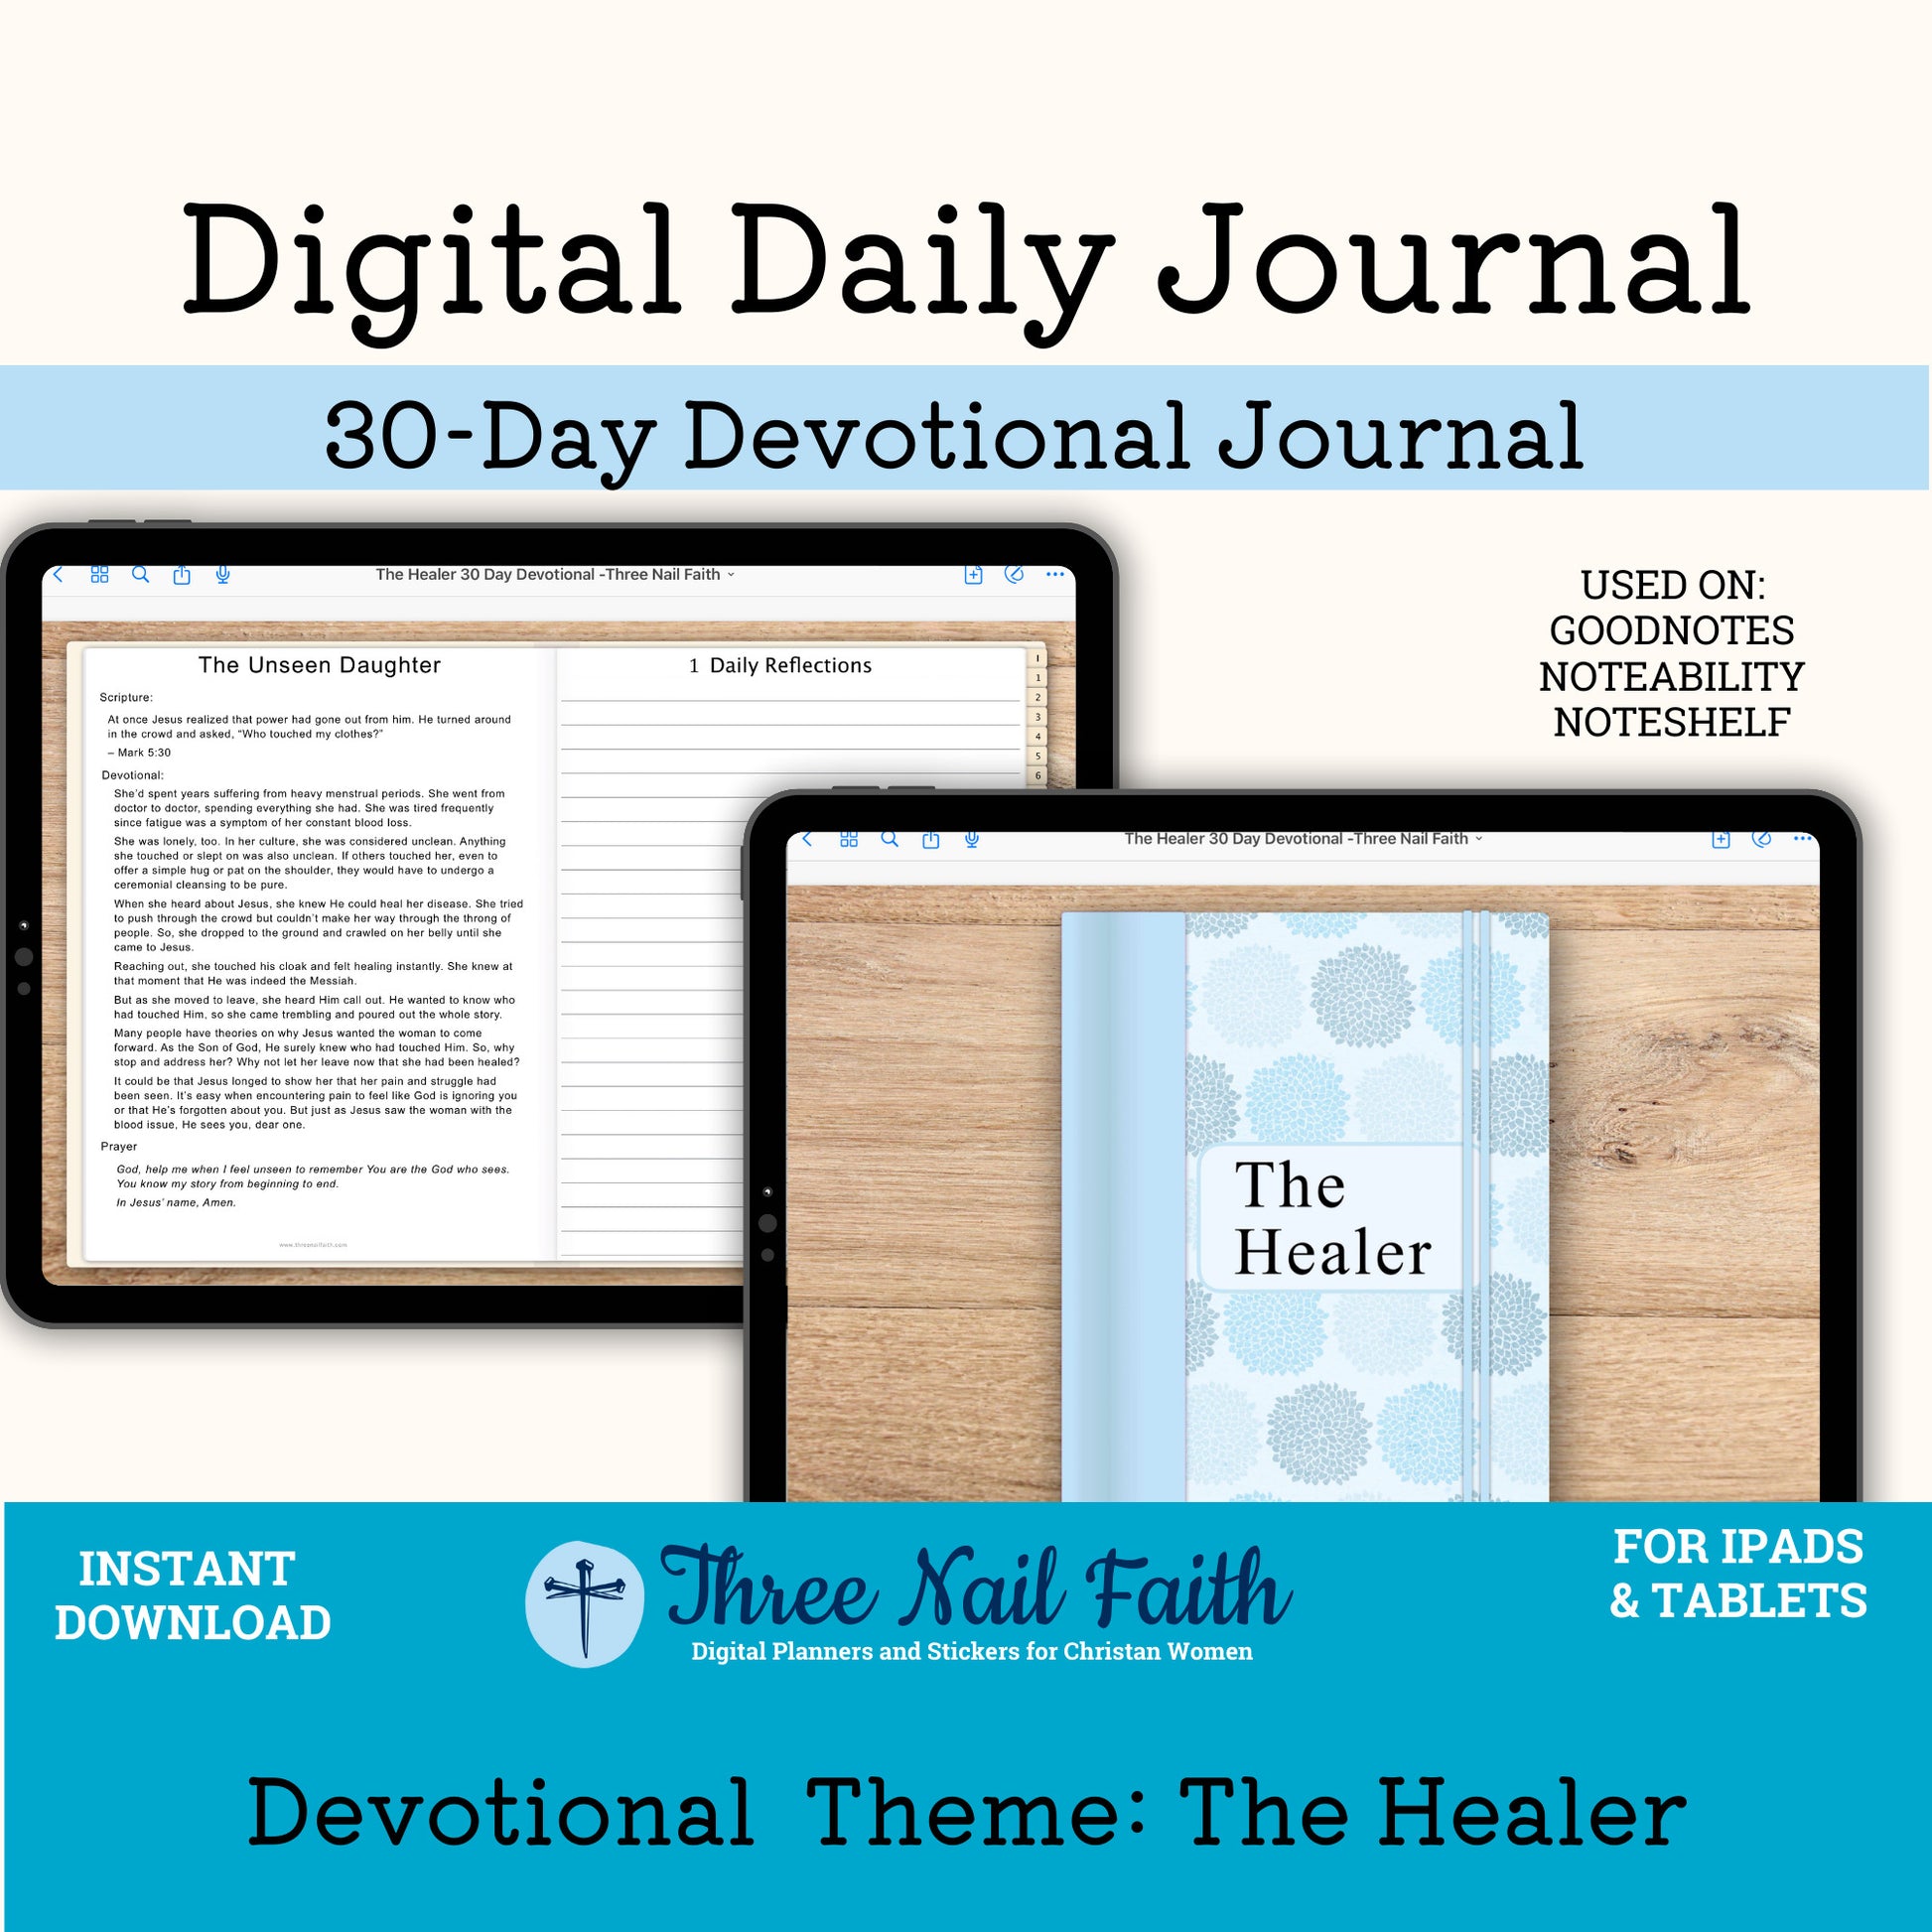 The Healer digital devotional